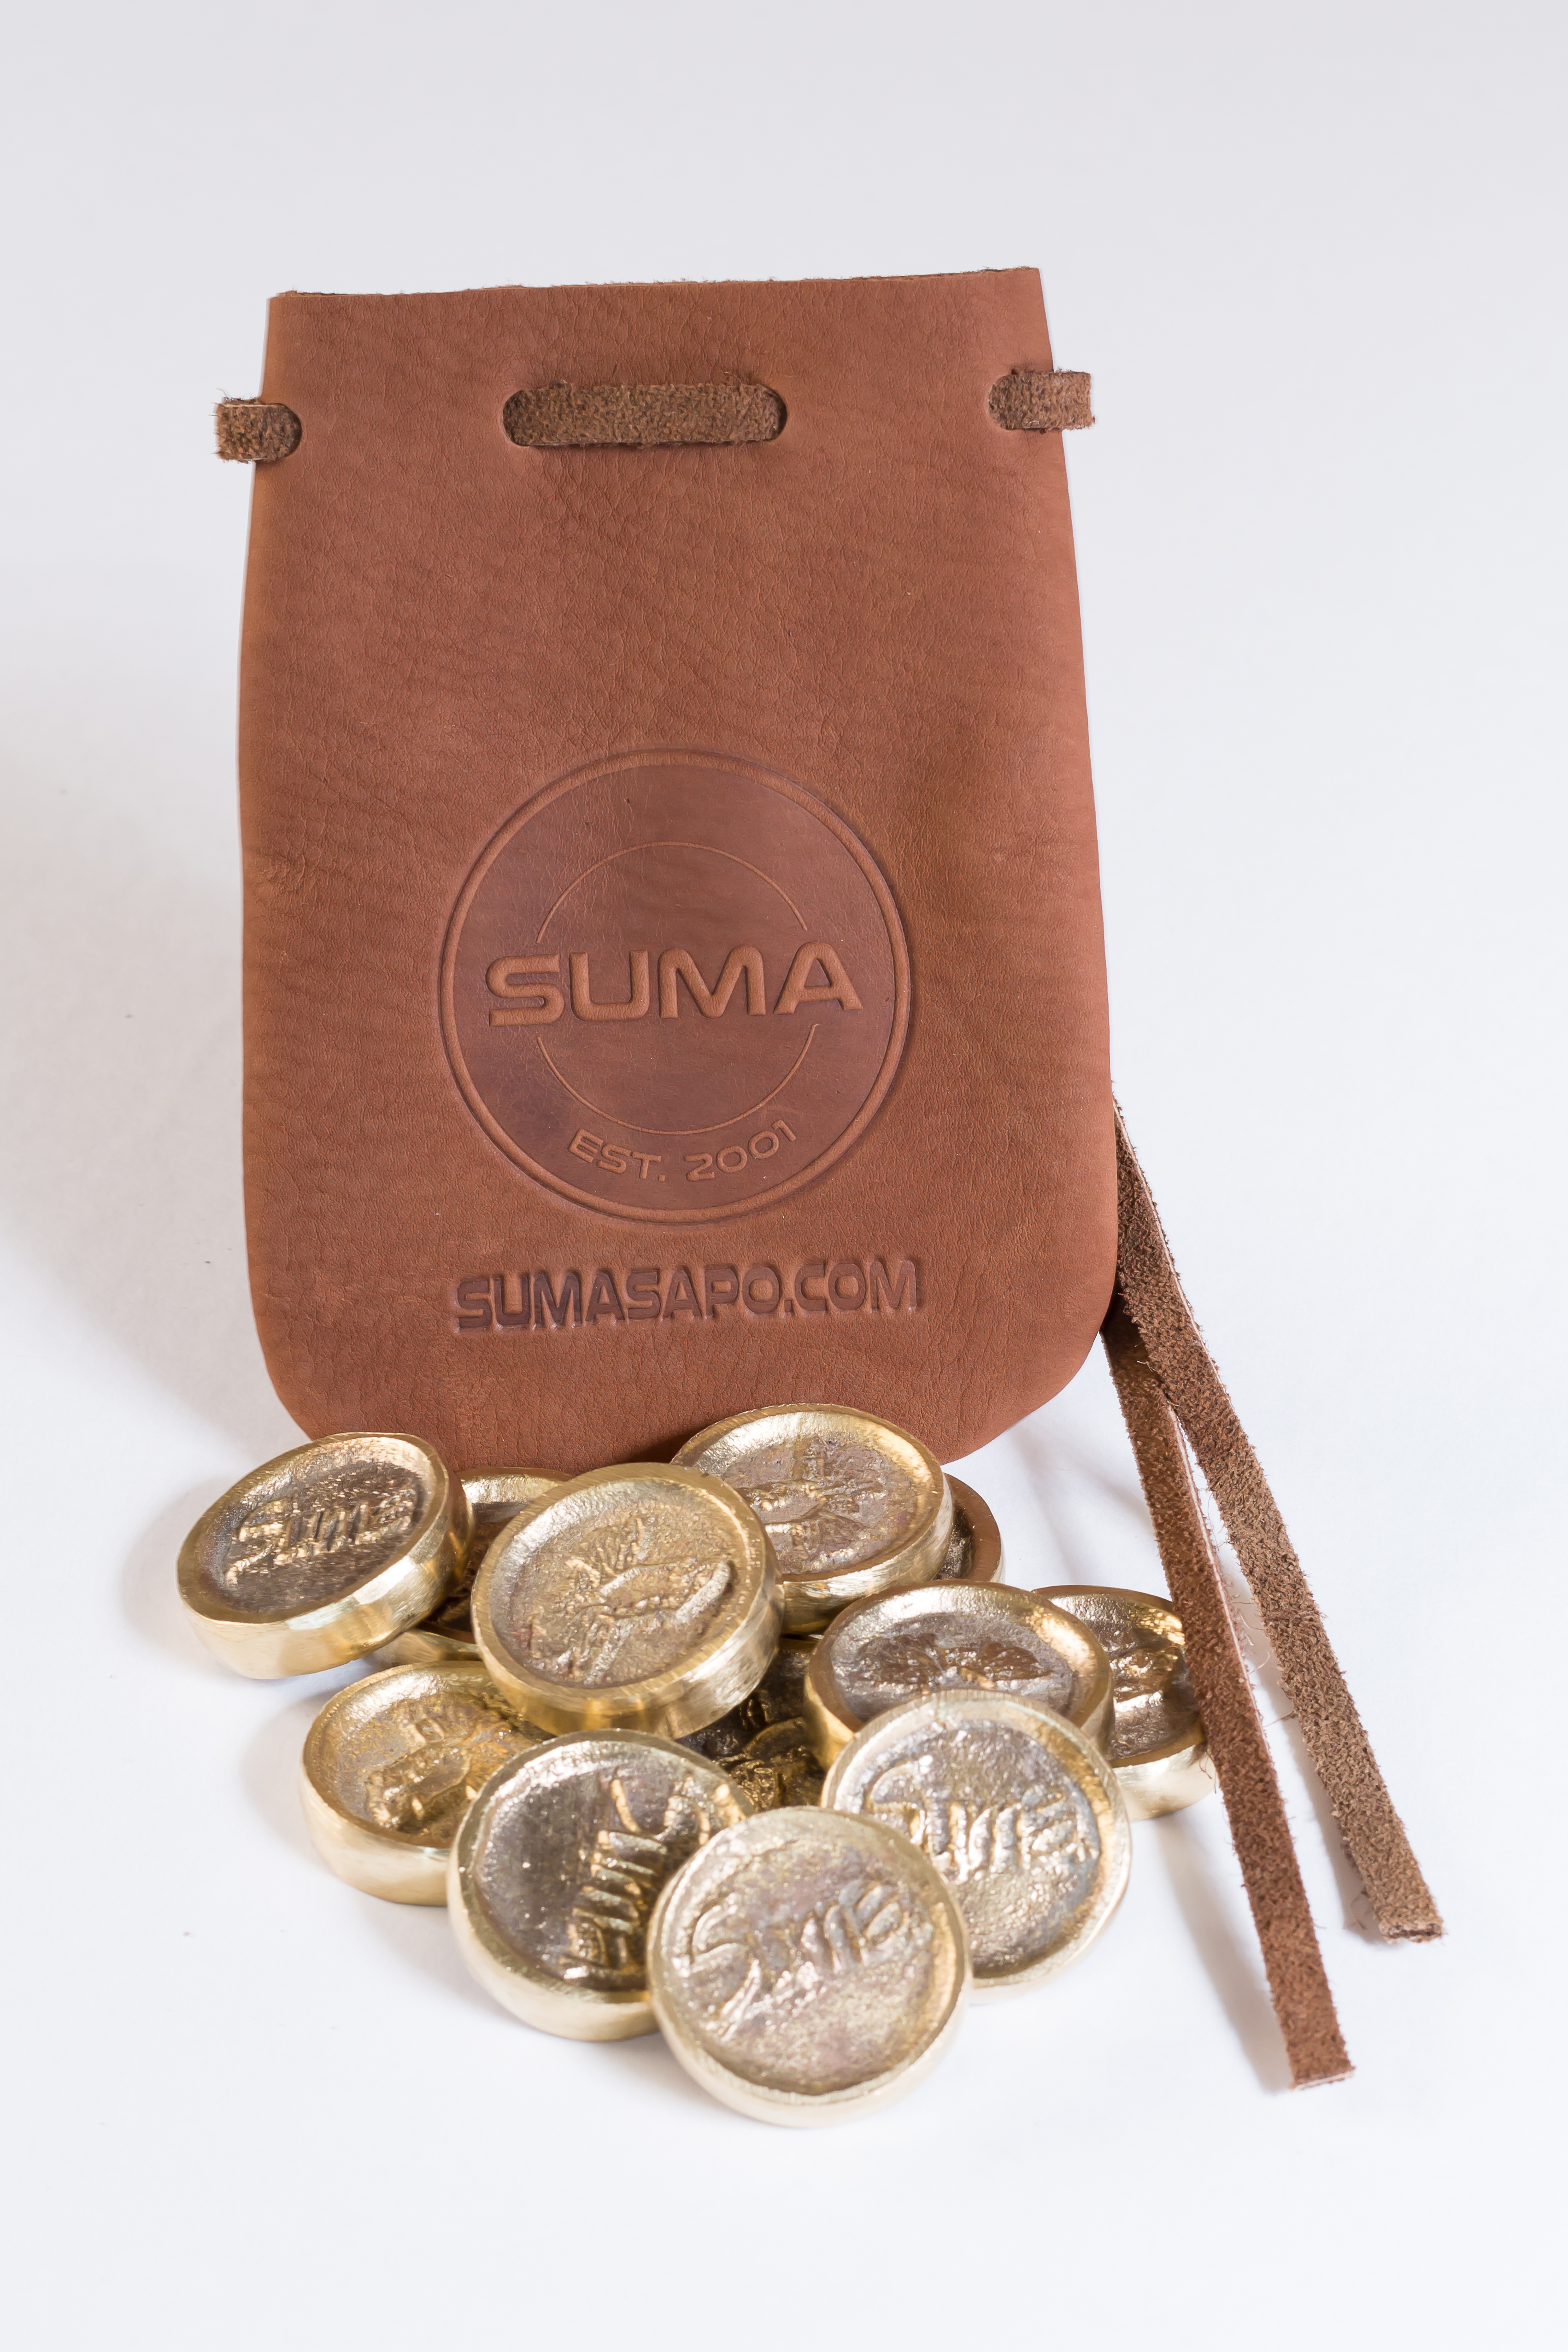 SUMA® SAPO - Juego de Sapo Game - Token Set - Light Brown Leather Pouch